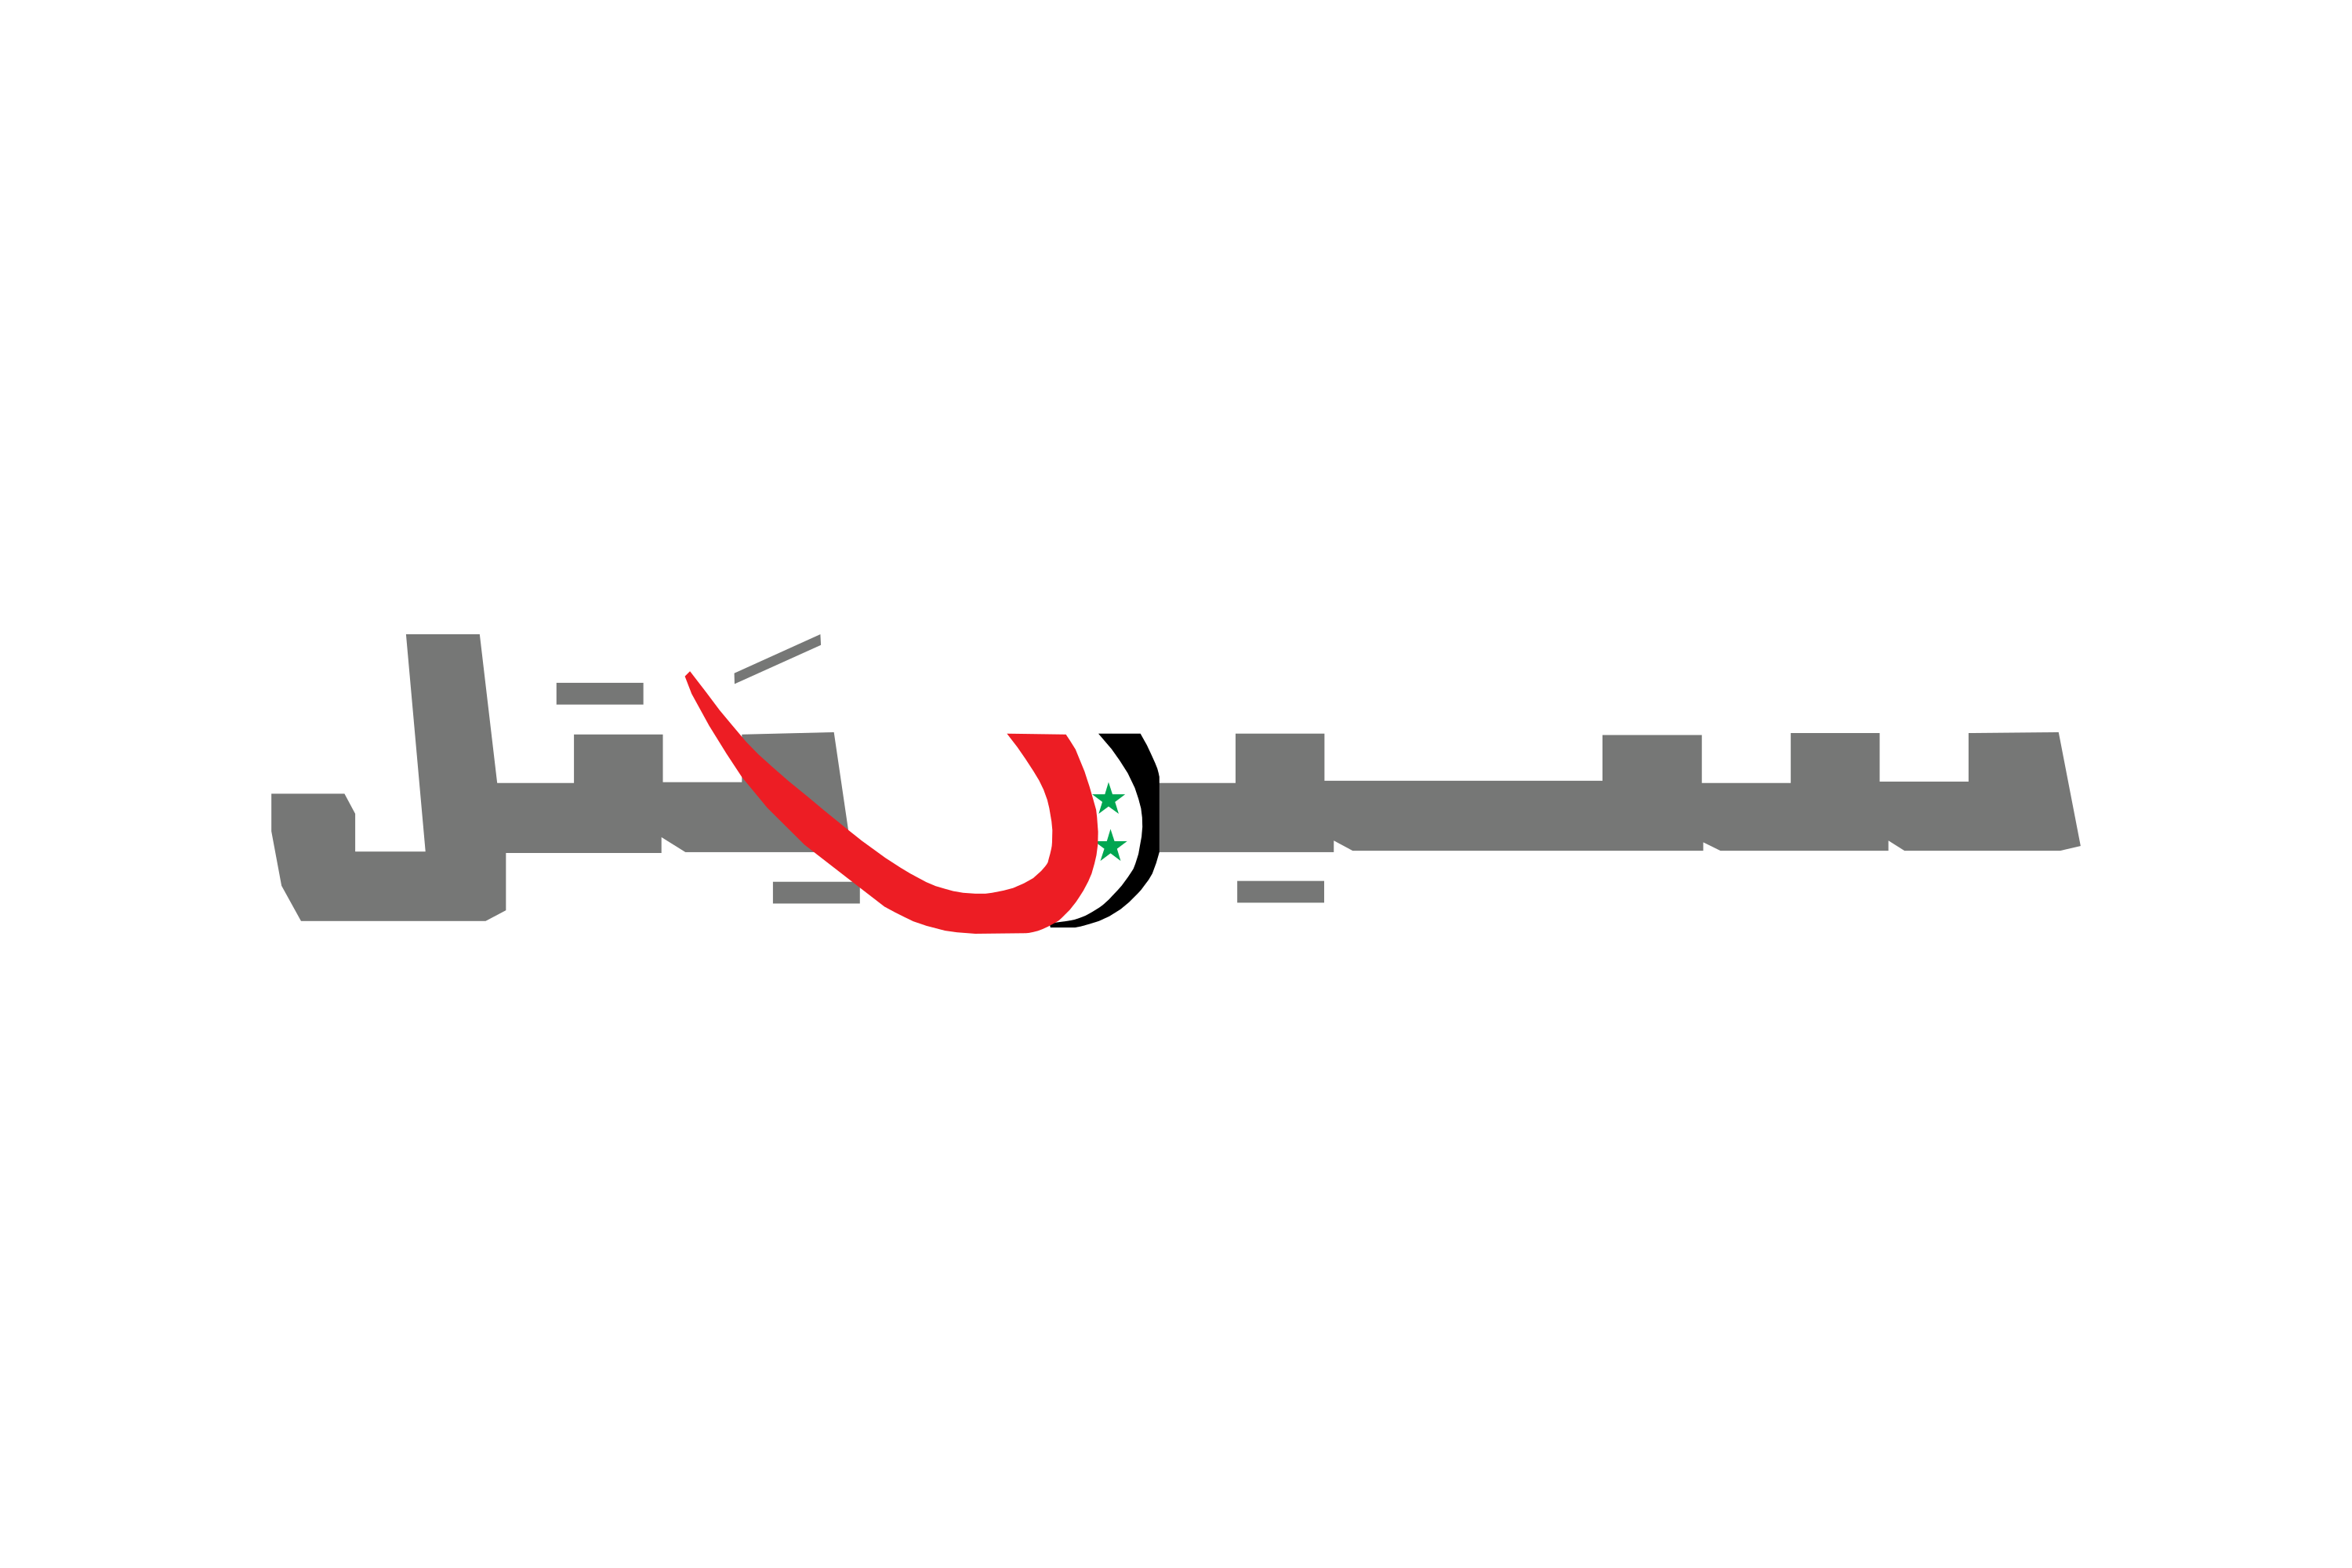 Download Syriatel شركة نصابة Logo in SVG Vector or PNG File Format